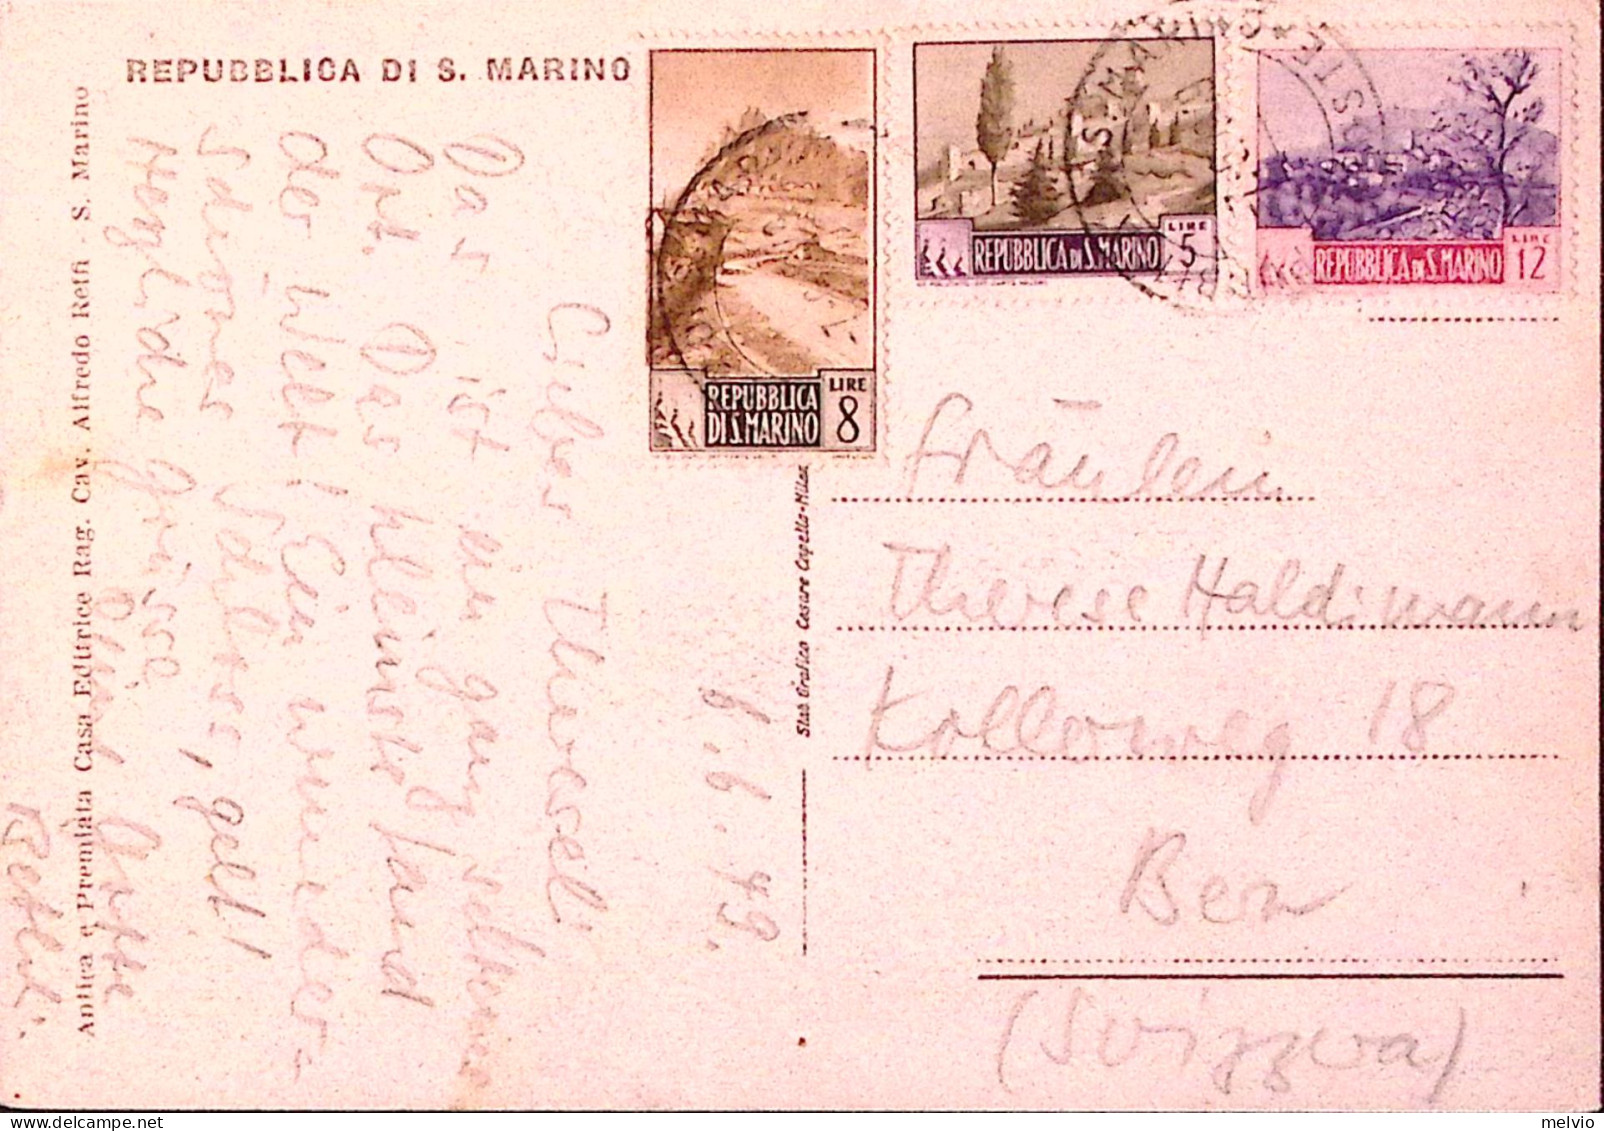 1979-SAN MARINO EUROPA VEDUTE Lire 5, 8 E 12 (346+348+350) Su Cartolina Illustra - Storia Postale